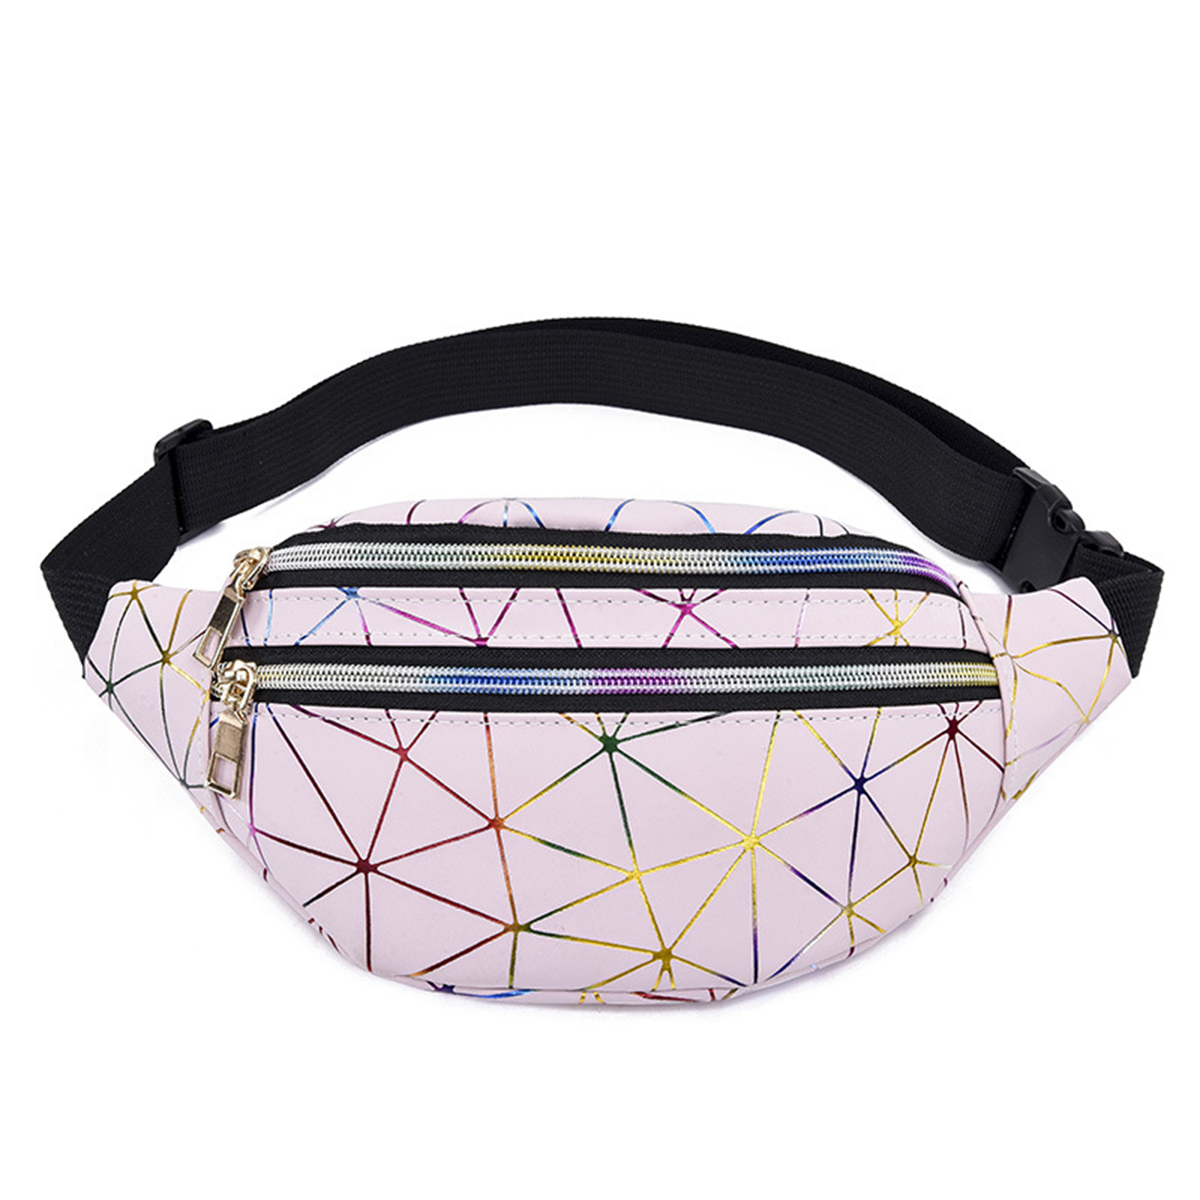 Holographic Waist Bags for Women Pink Silver Fanny Pack Women Belt Bag Black Geometric Waist Chest Phone Bag Men - image 1 of 7